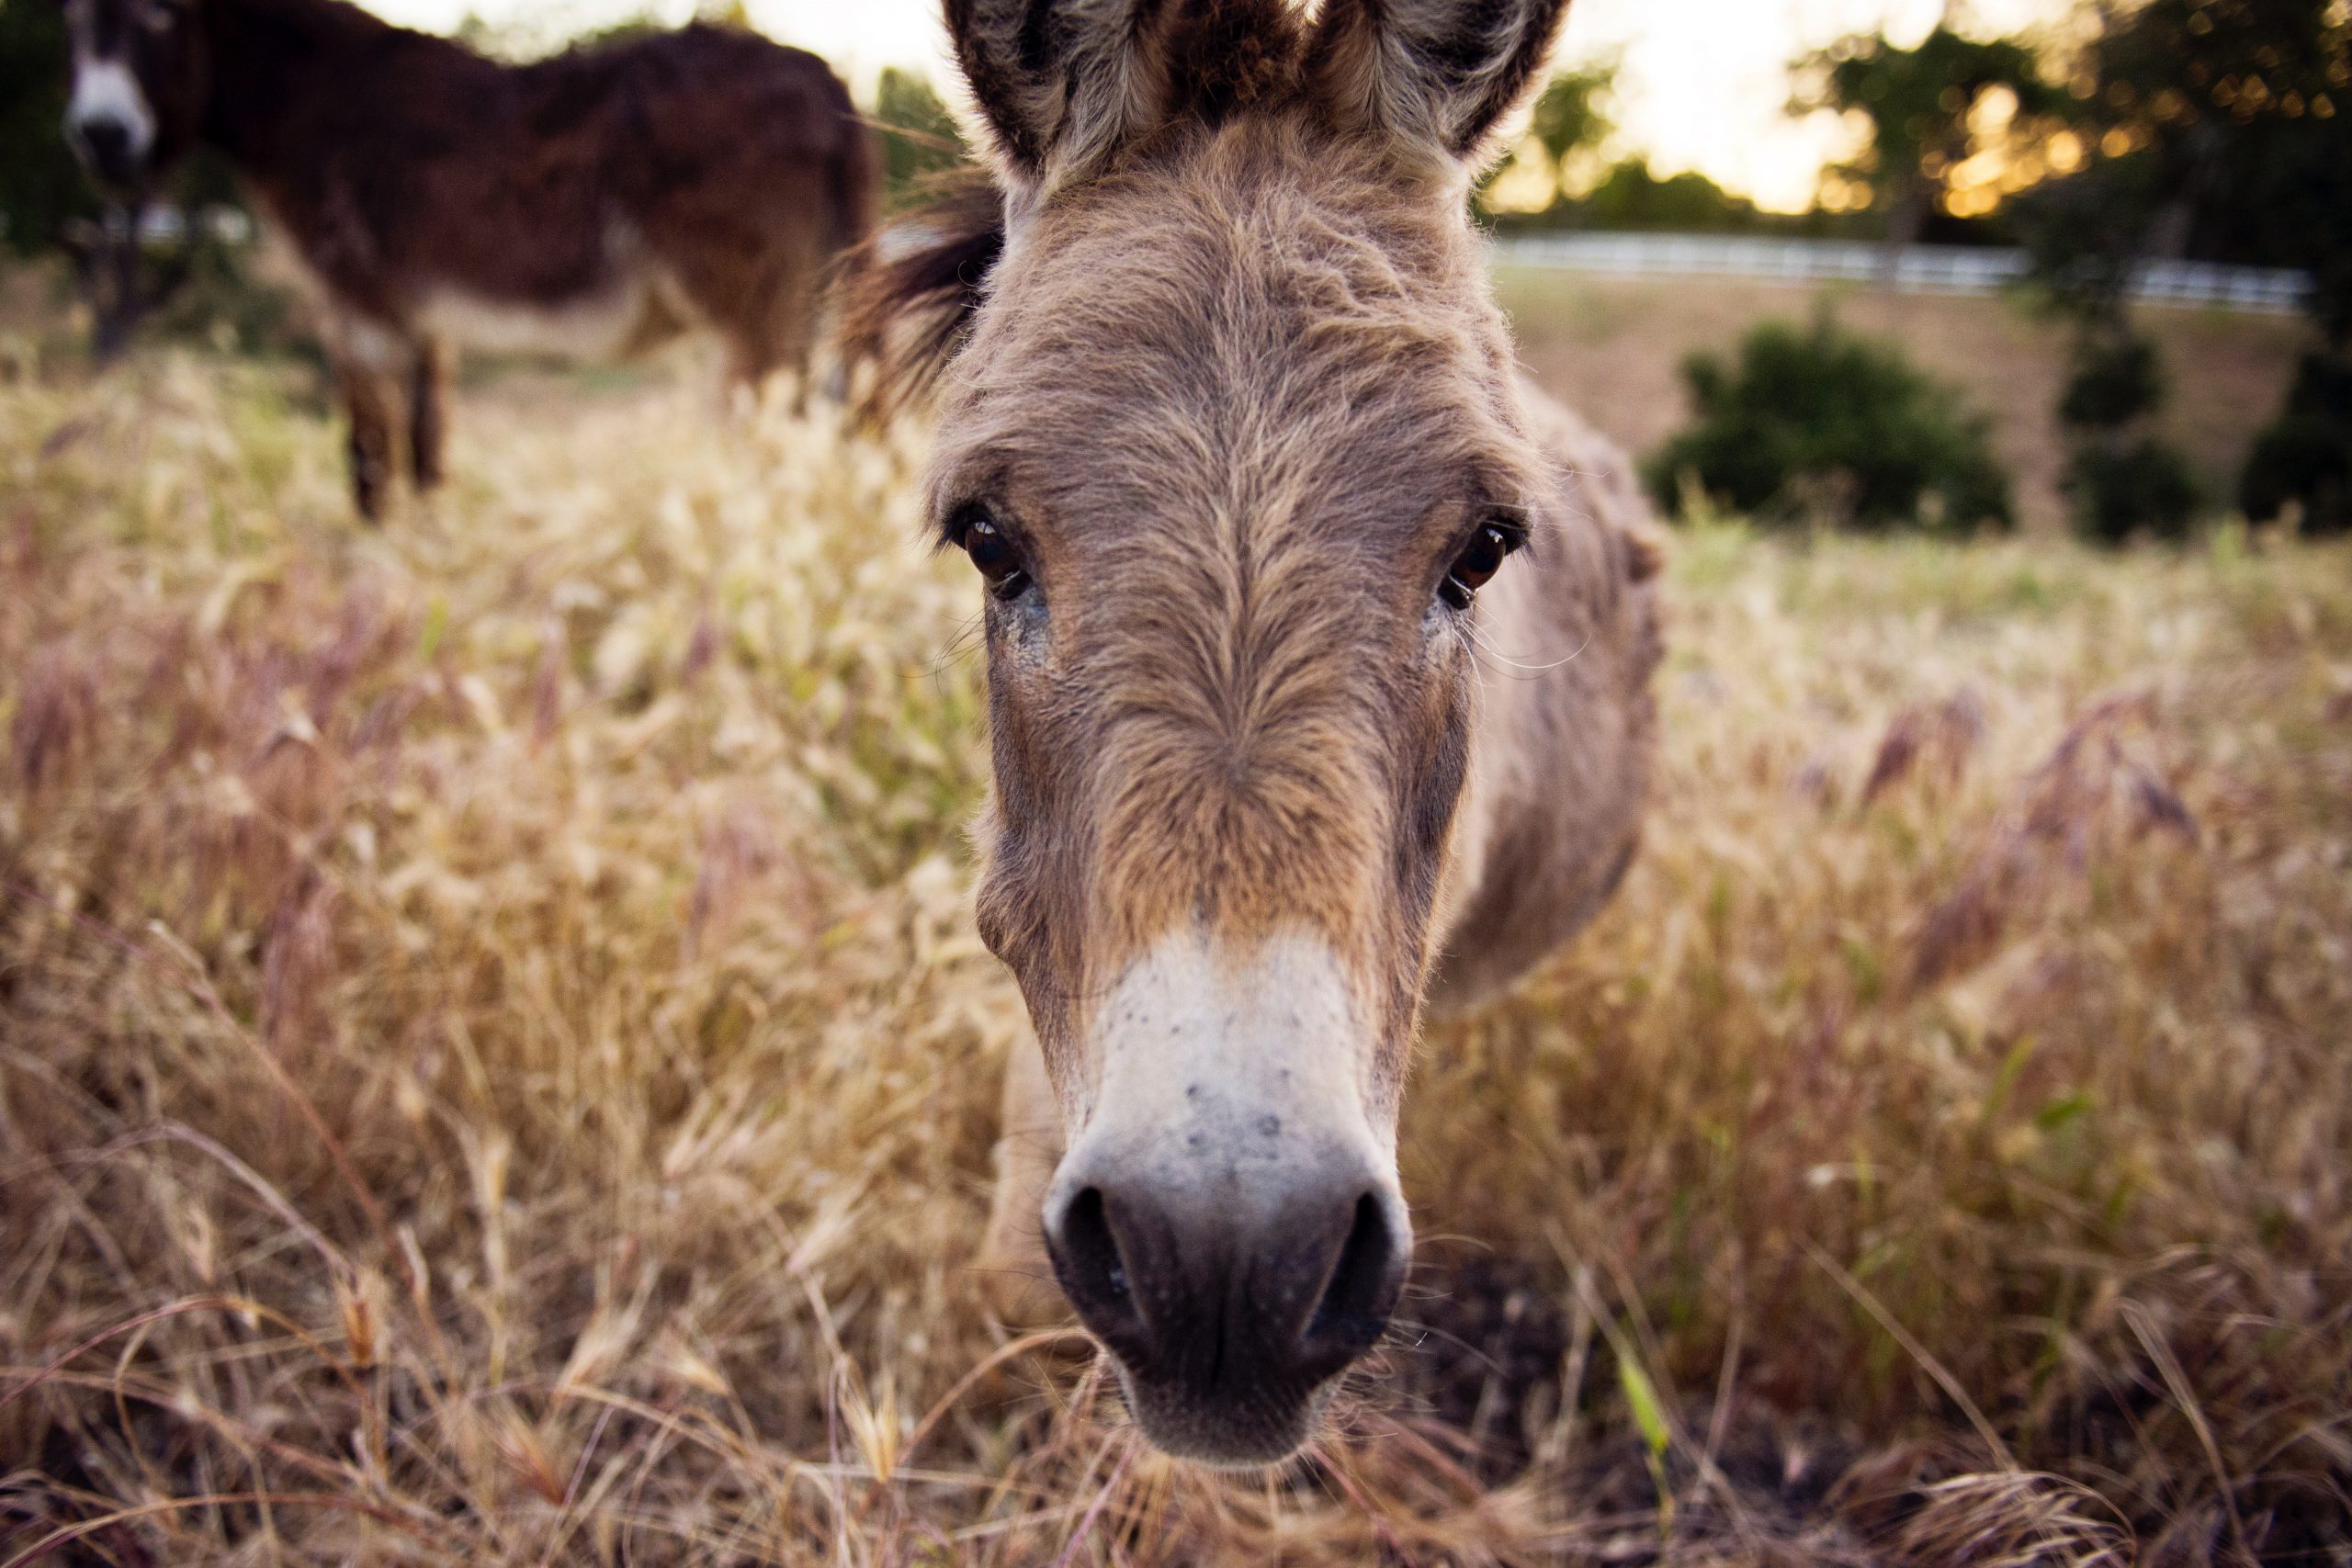 tisno croatia donkey